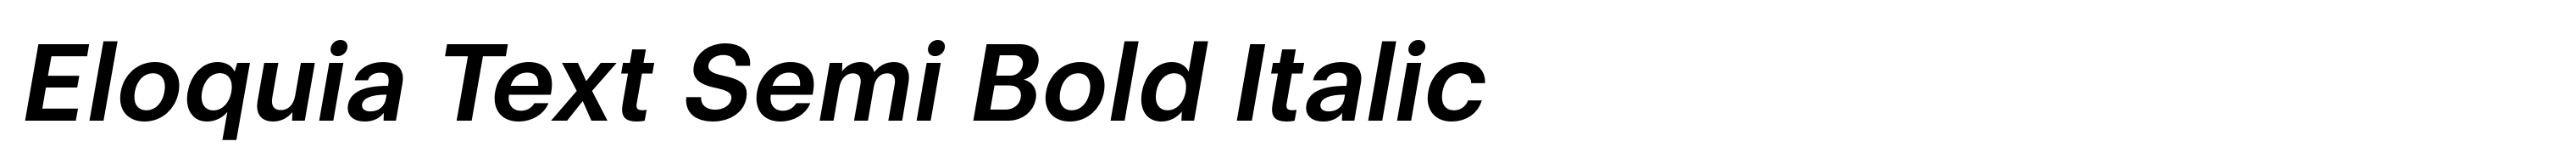 Eloquia Text Semi Bold Italic